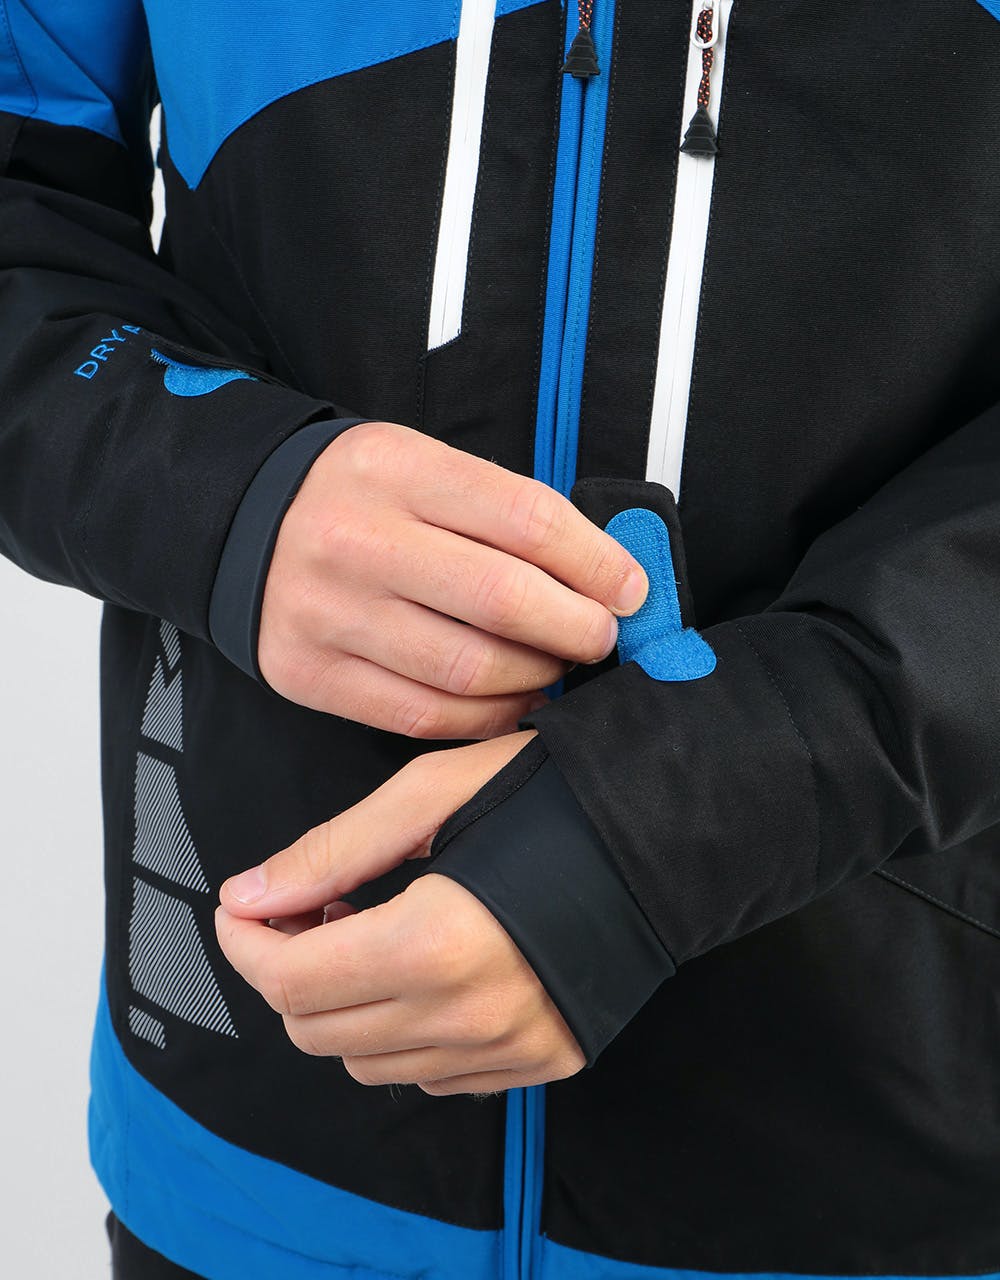 Picture Styler Snowboard Jacket - Black/Blue